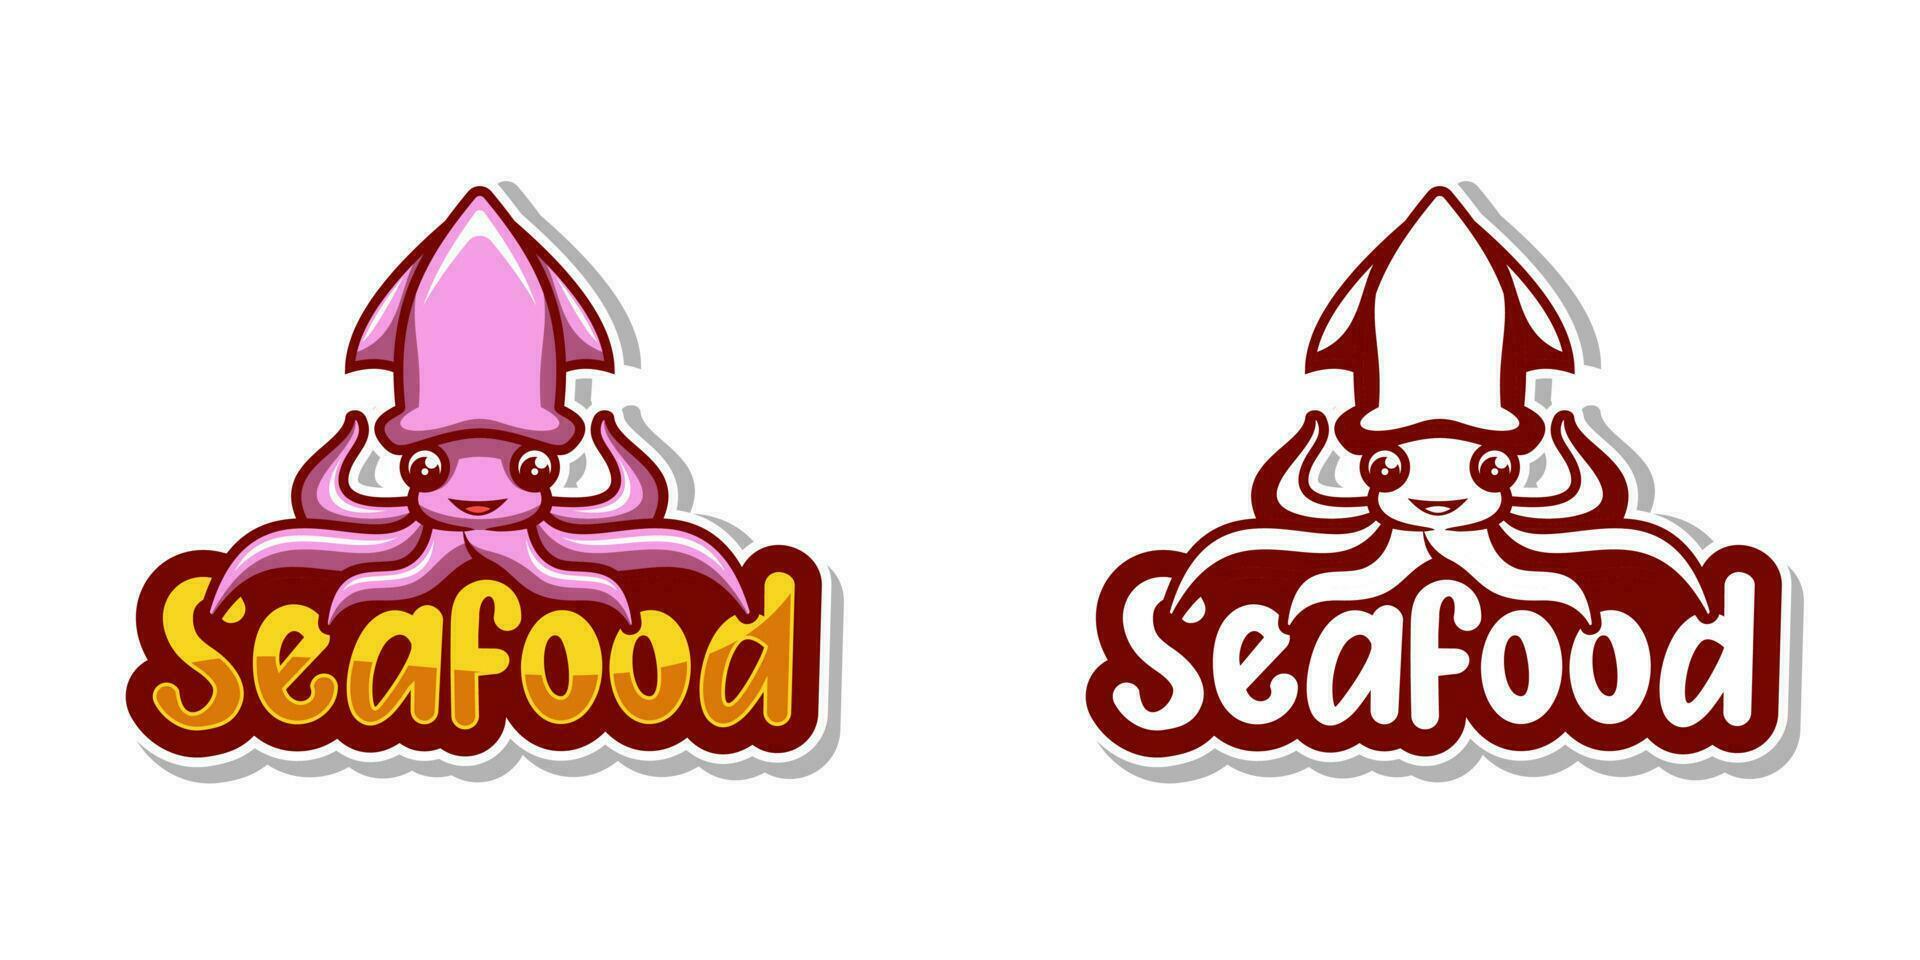 seafood logo vector